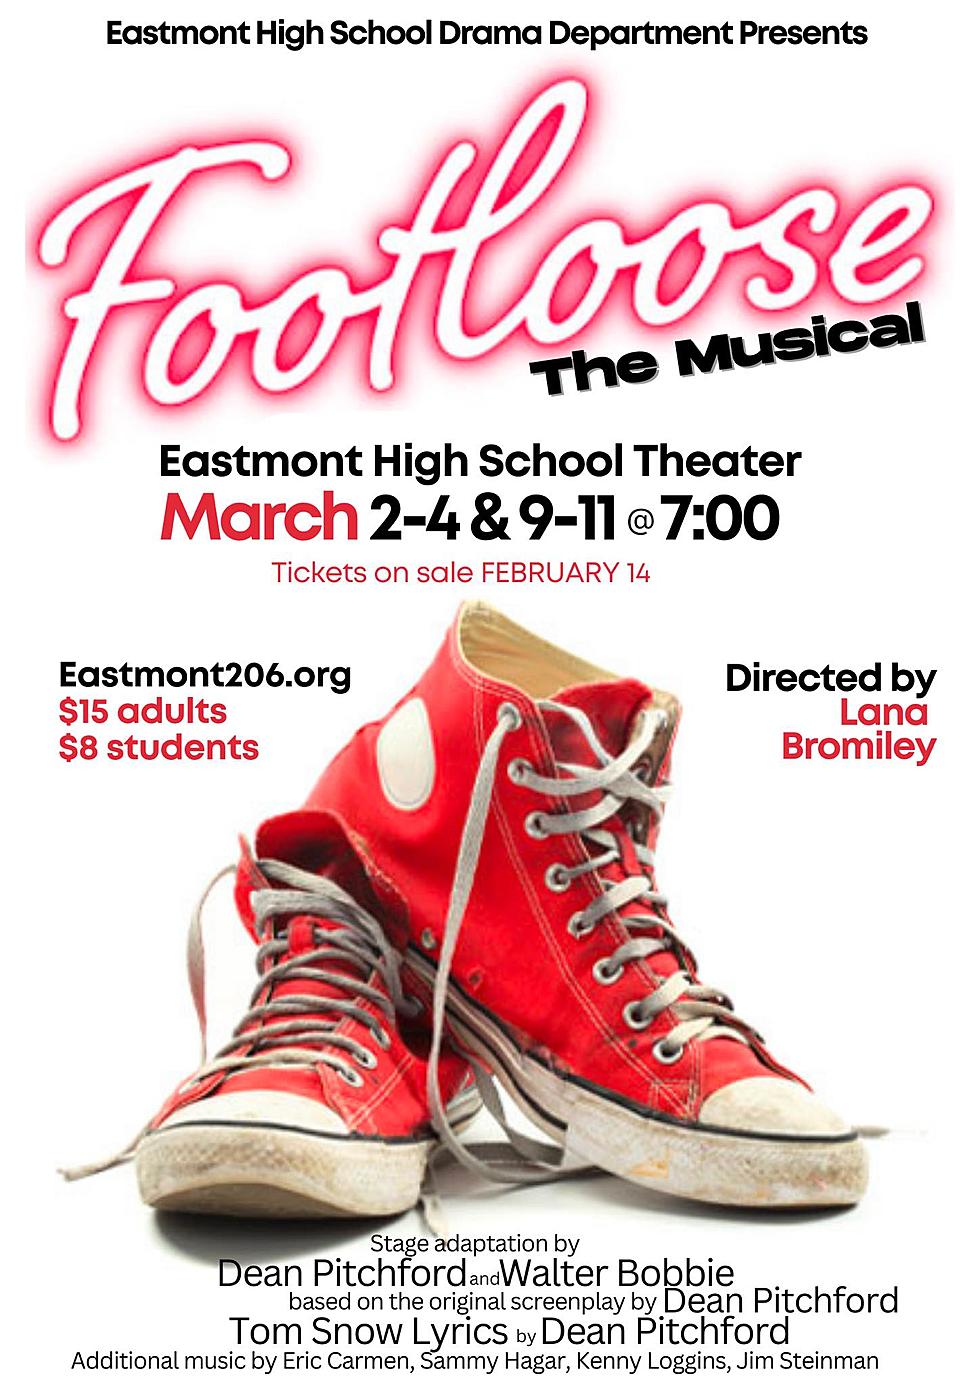 Eastmont High School Presents Footloose The Musical